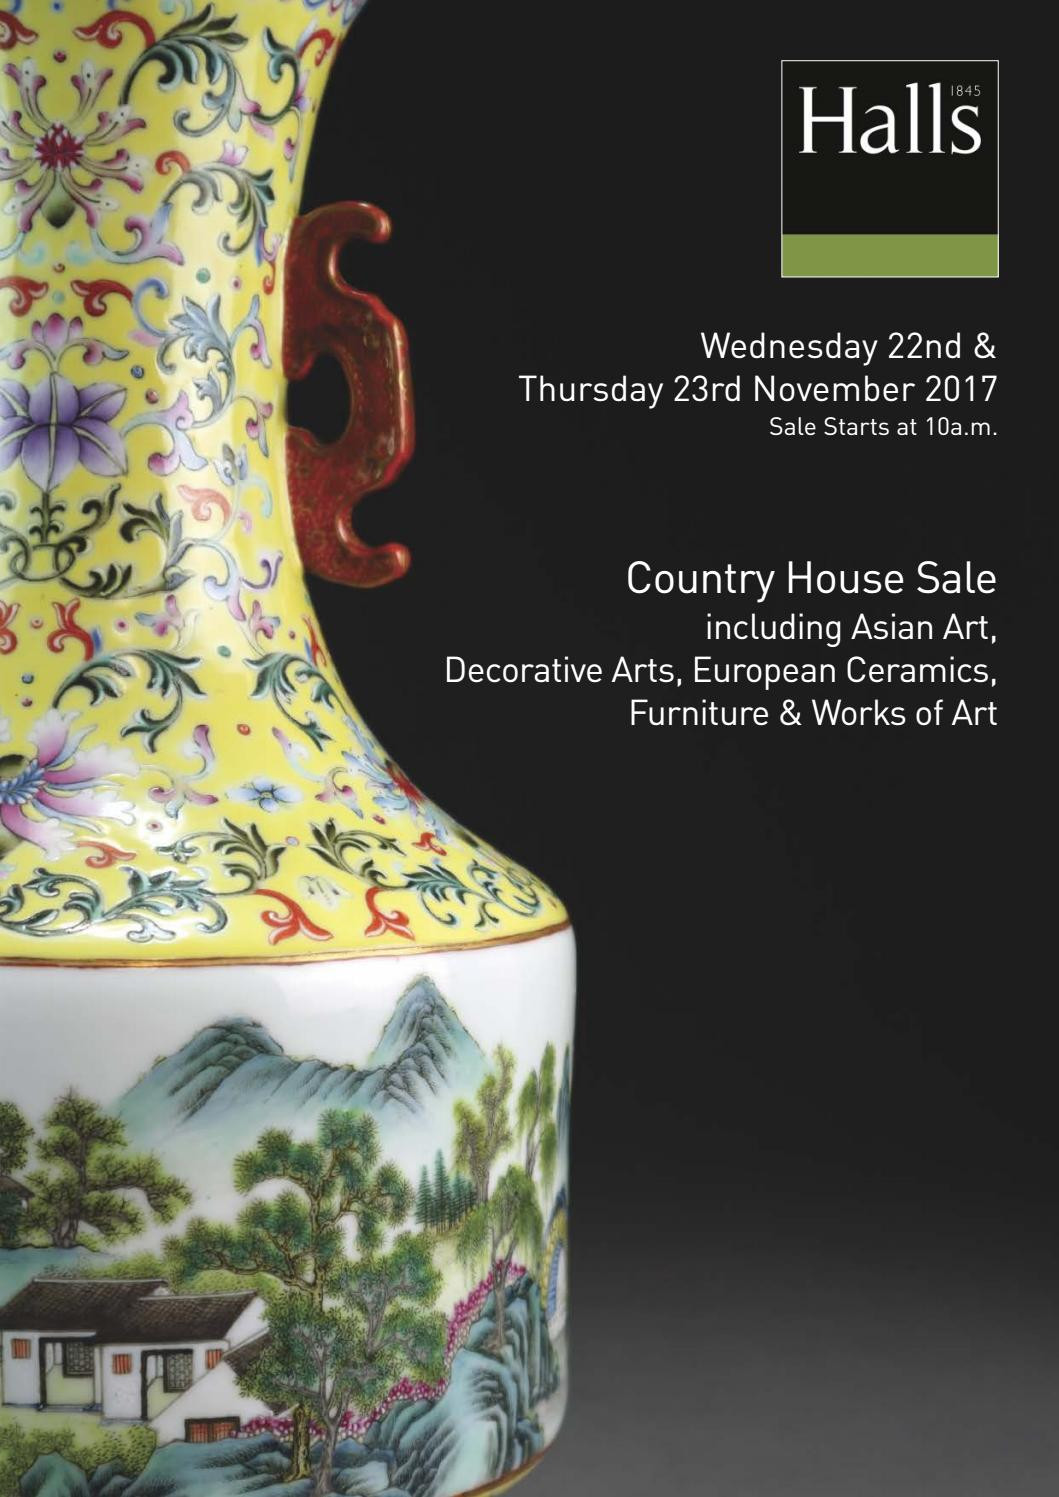 13 Cute Qianlong Emperor Vase 2024 free download qianlong emperor vase of halls auctioneers by jamm design ltd issuu with regard to page 1